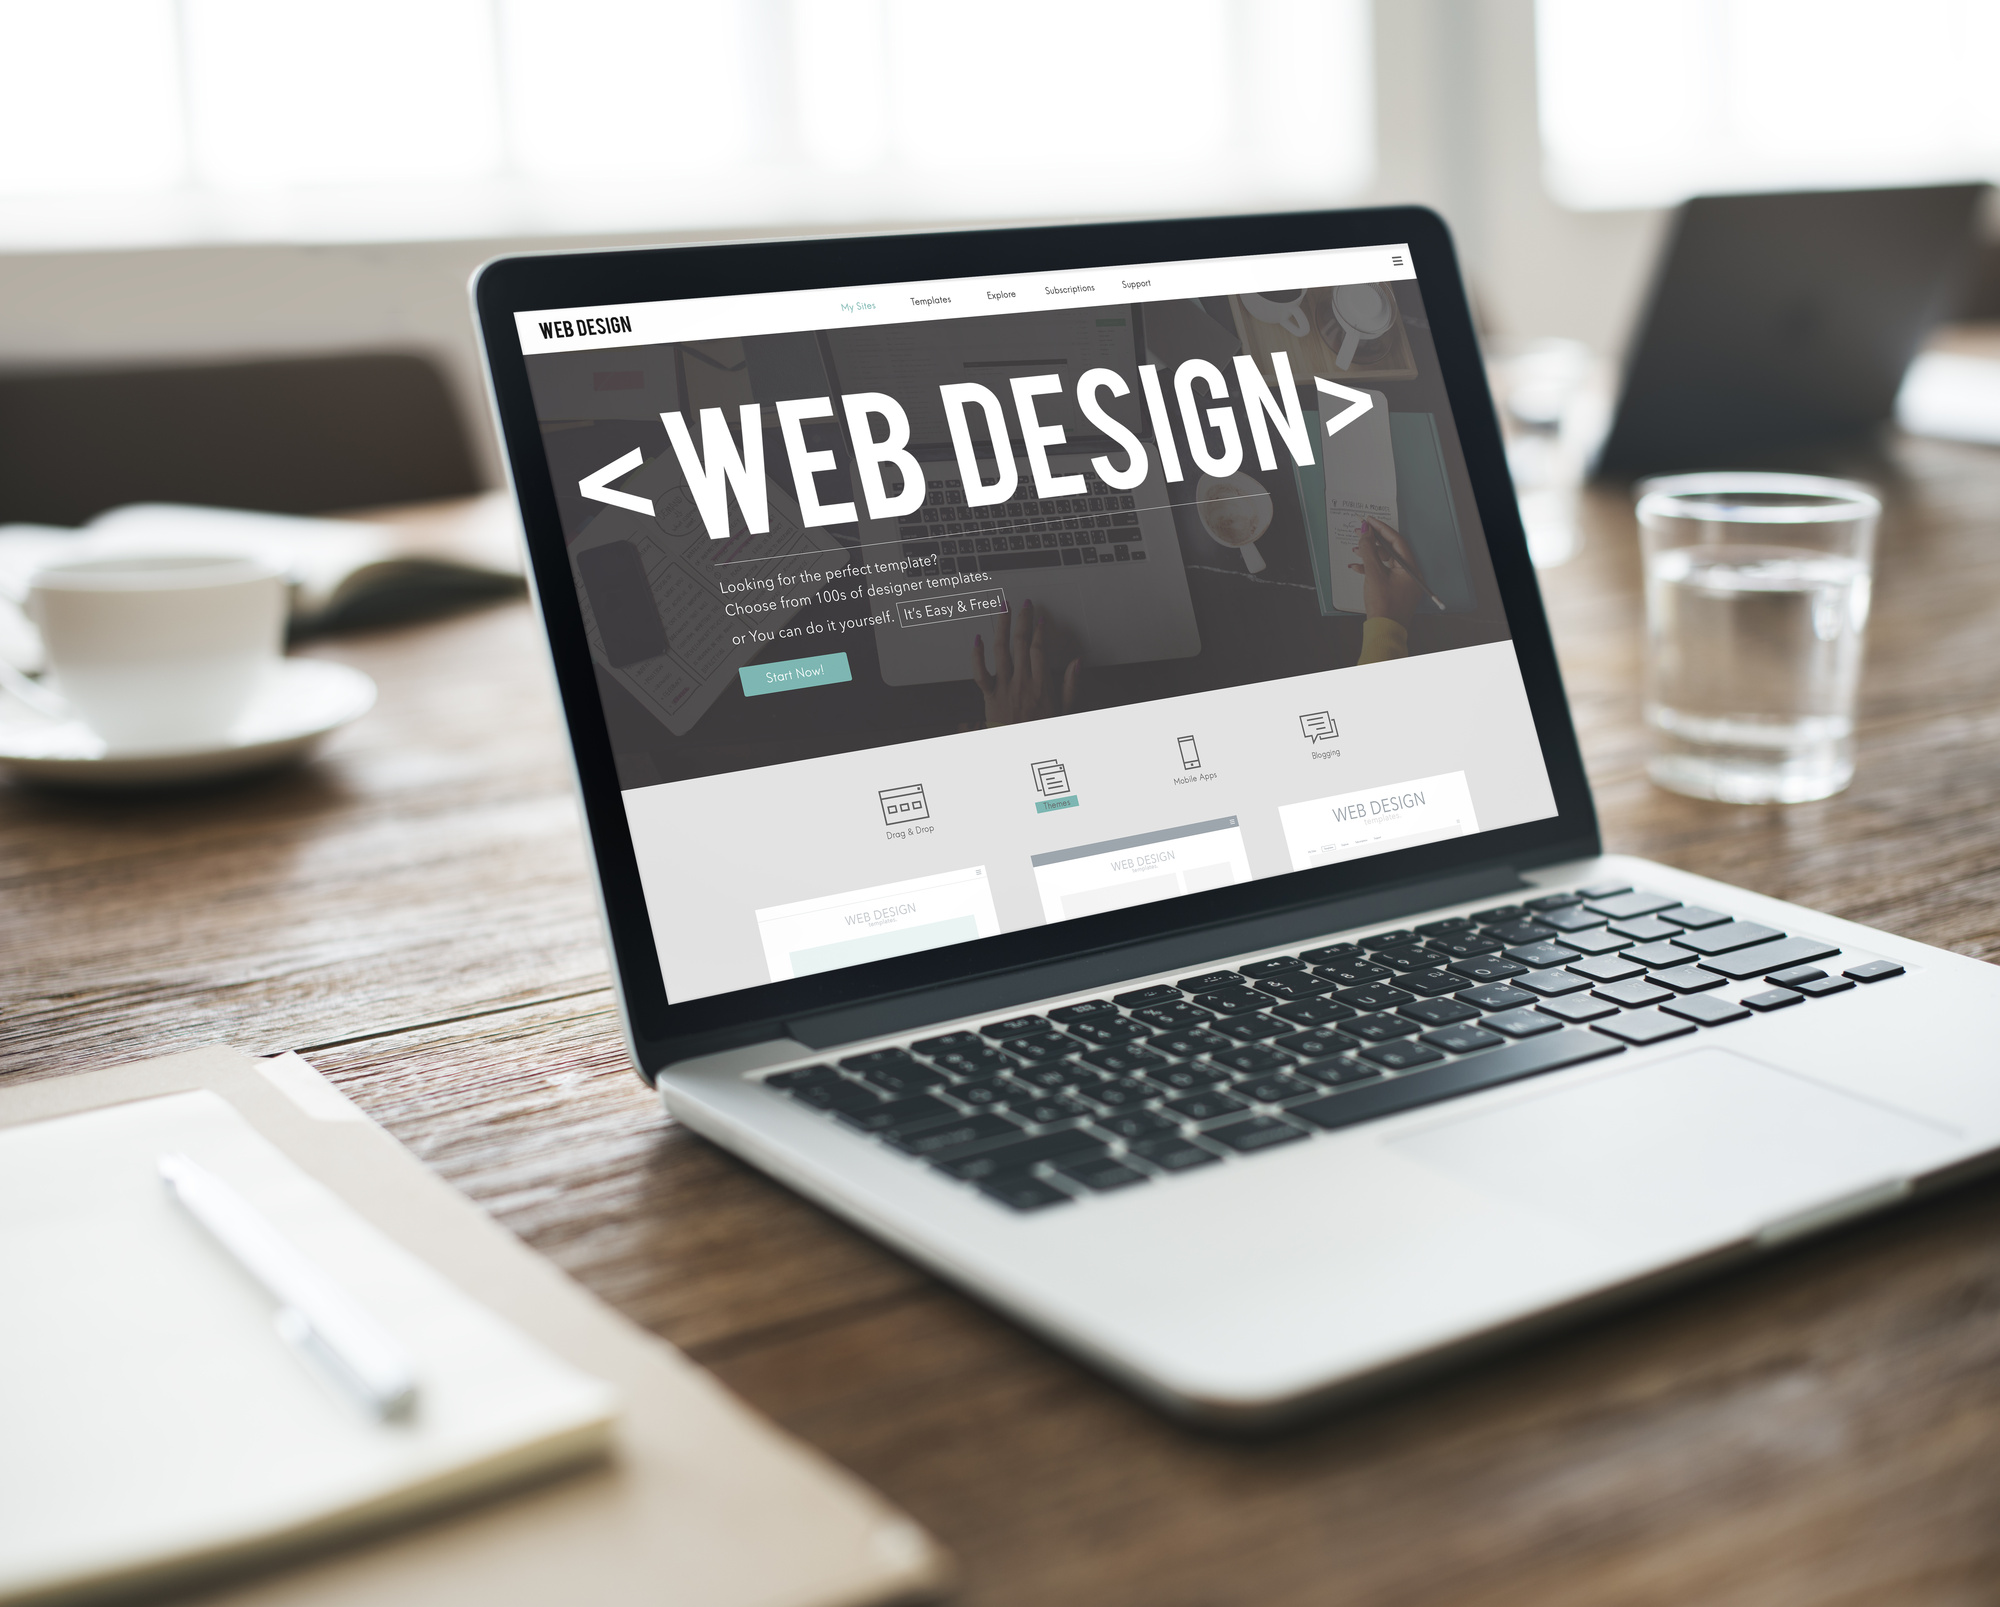 Web Design Visualized